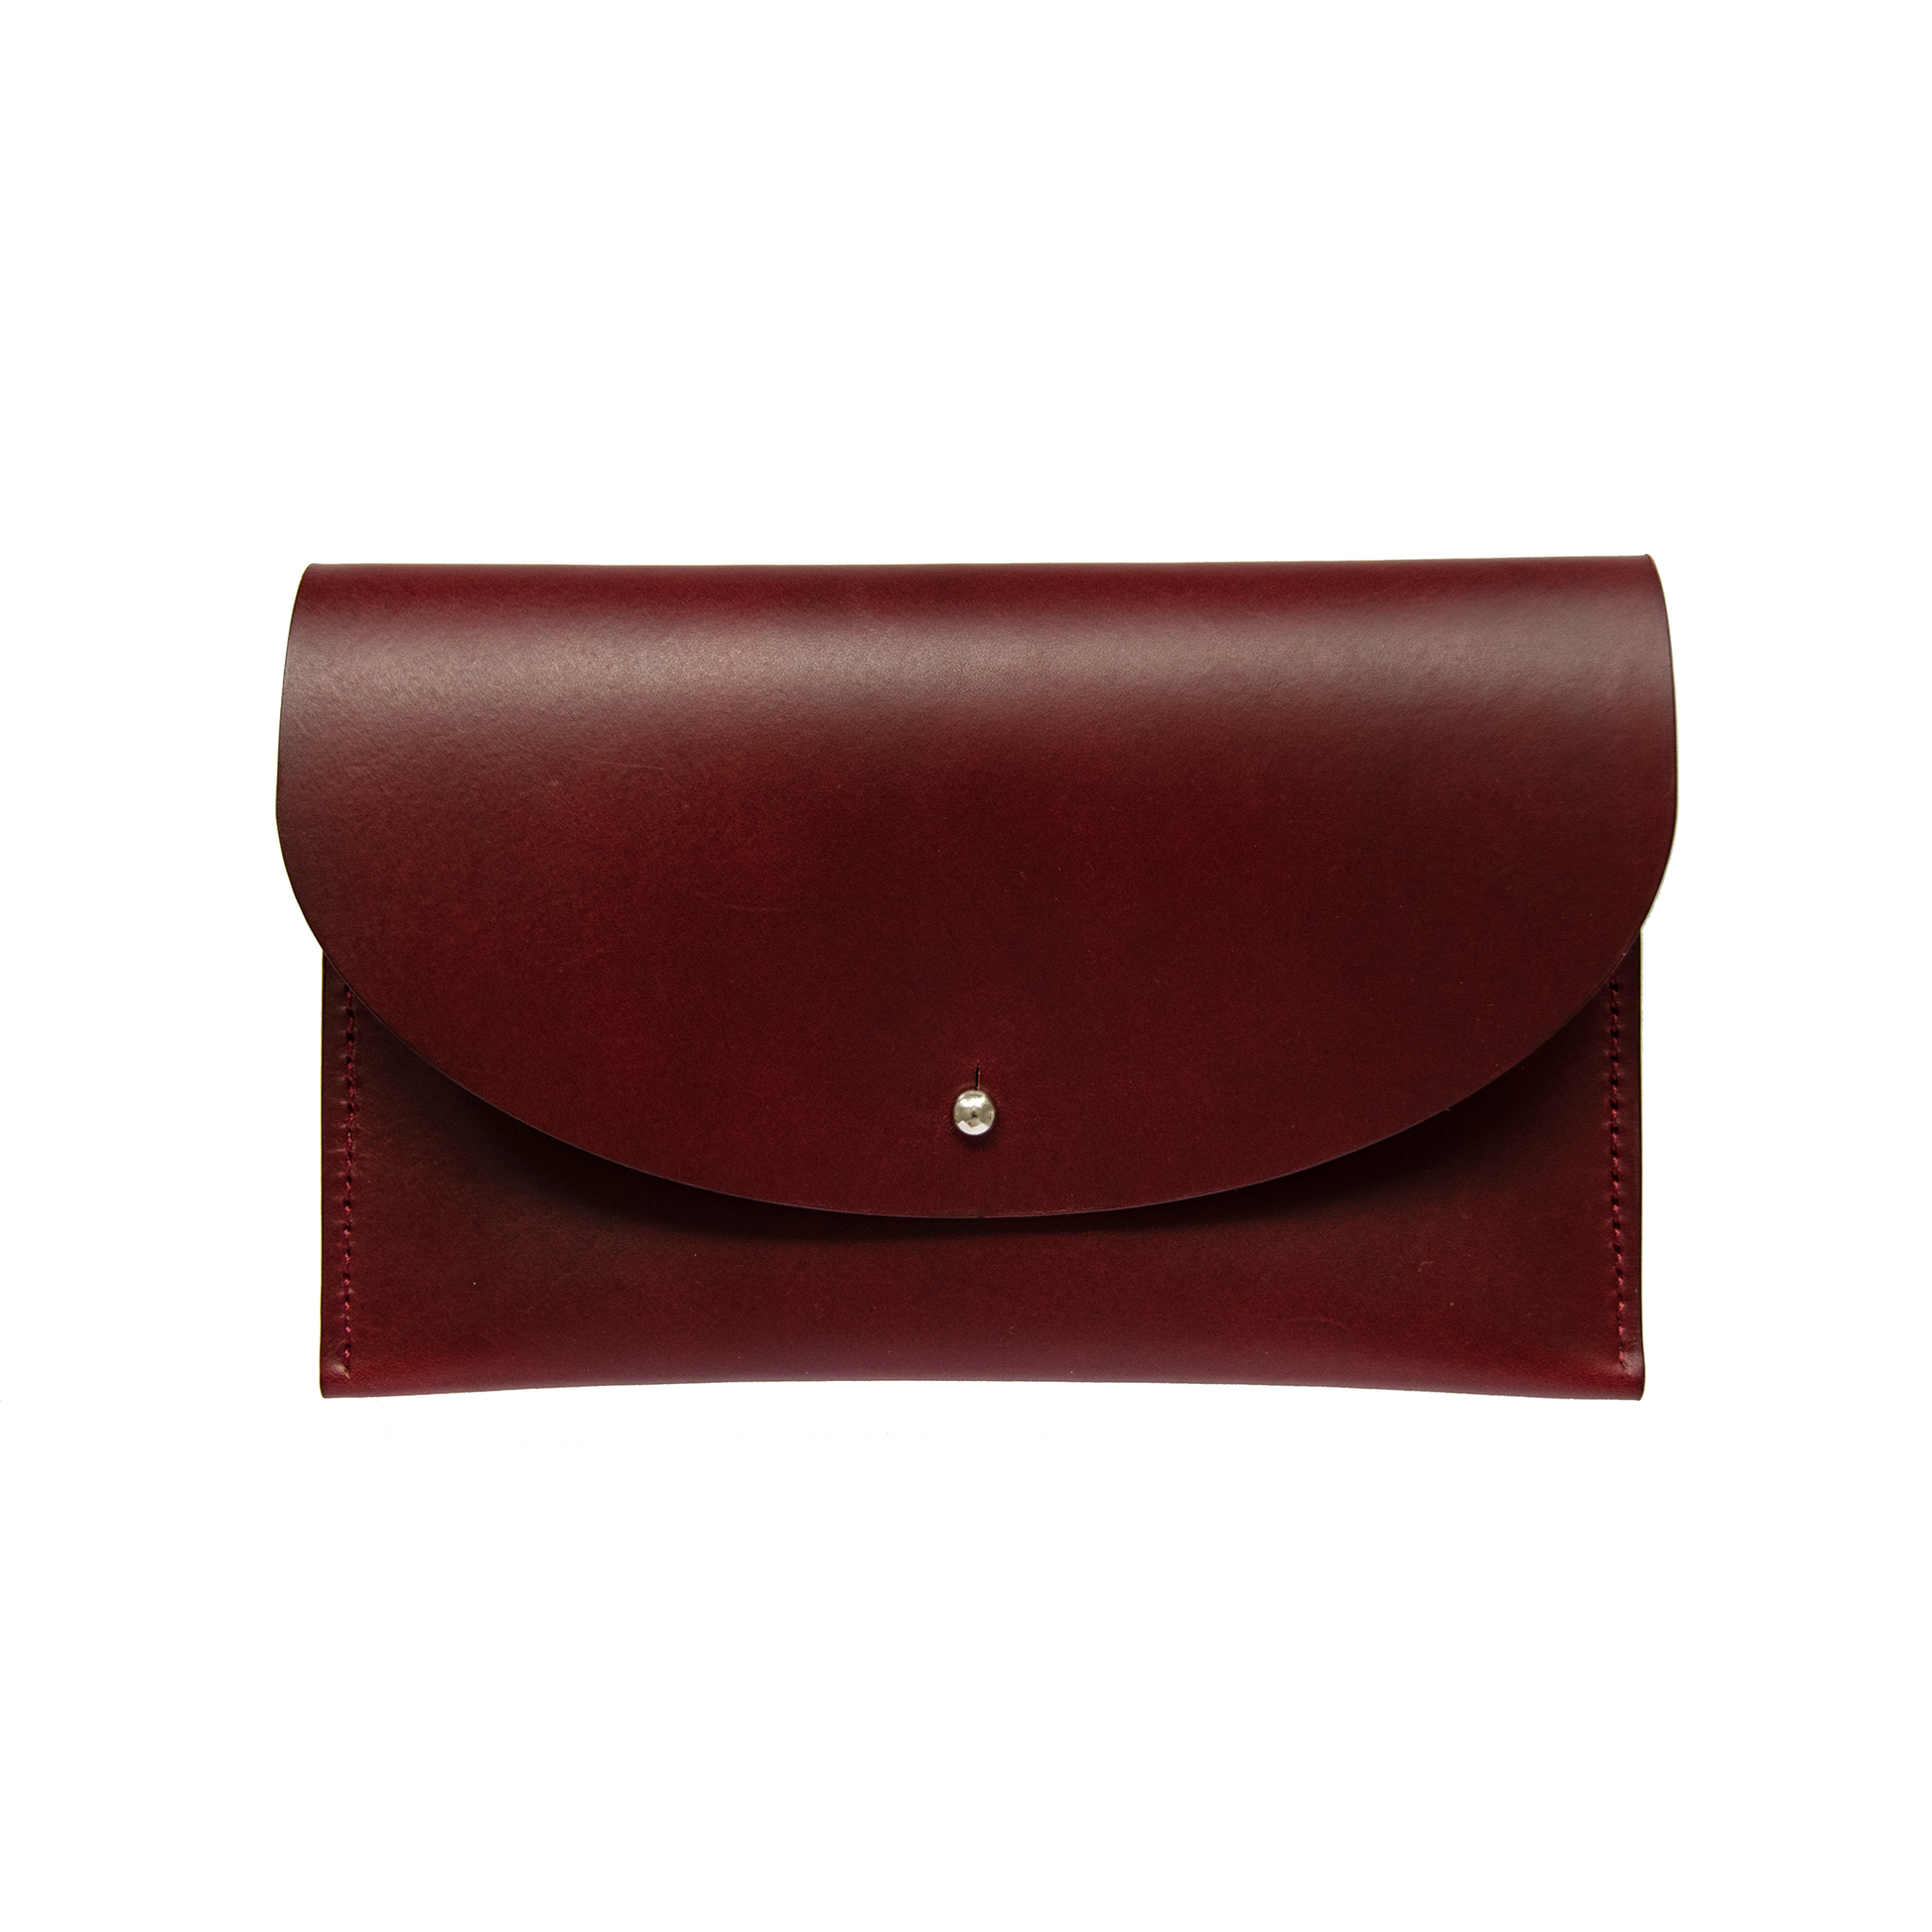 effectief Dochter Afleiding Bordeaux Italian Leather Clutch | Maragold Designs